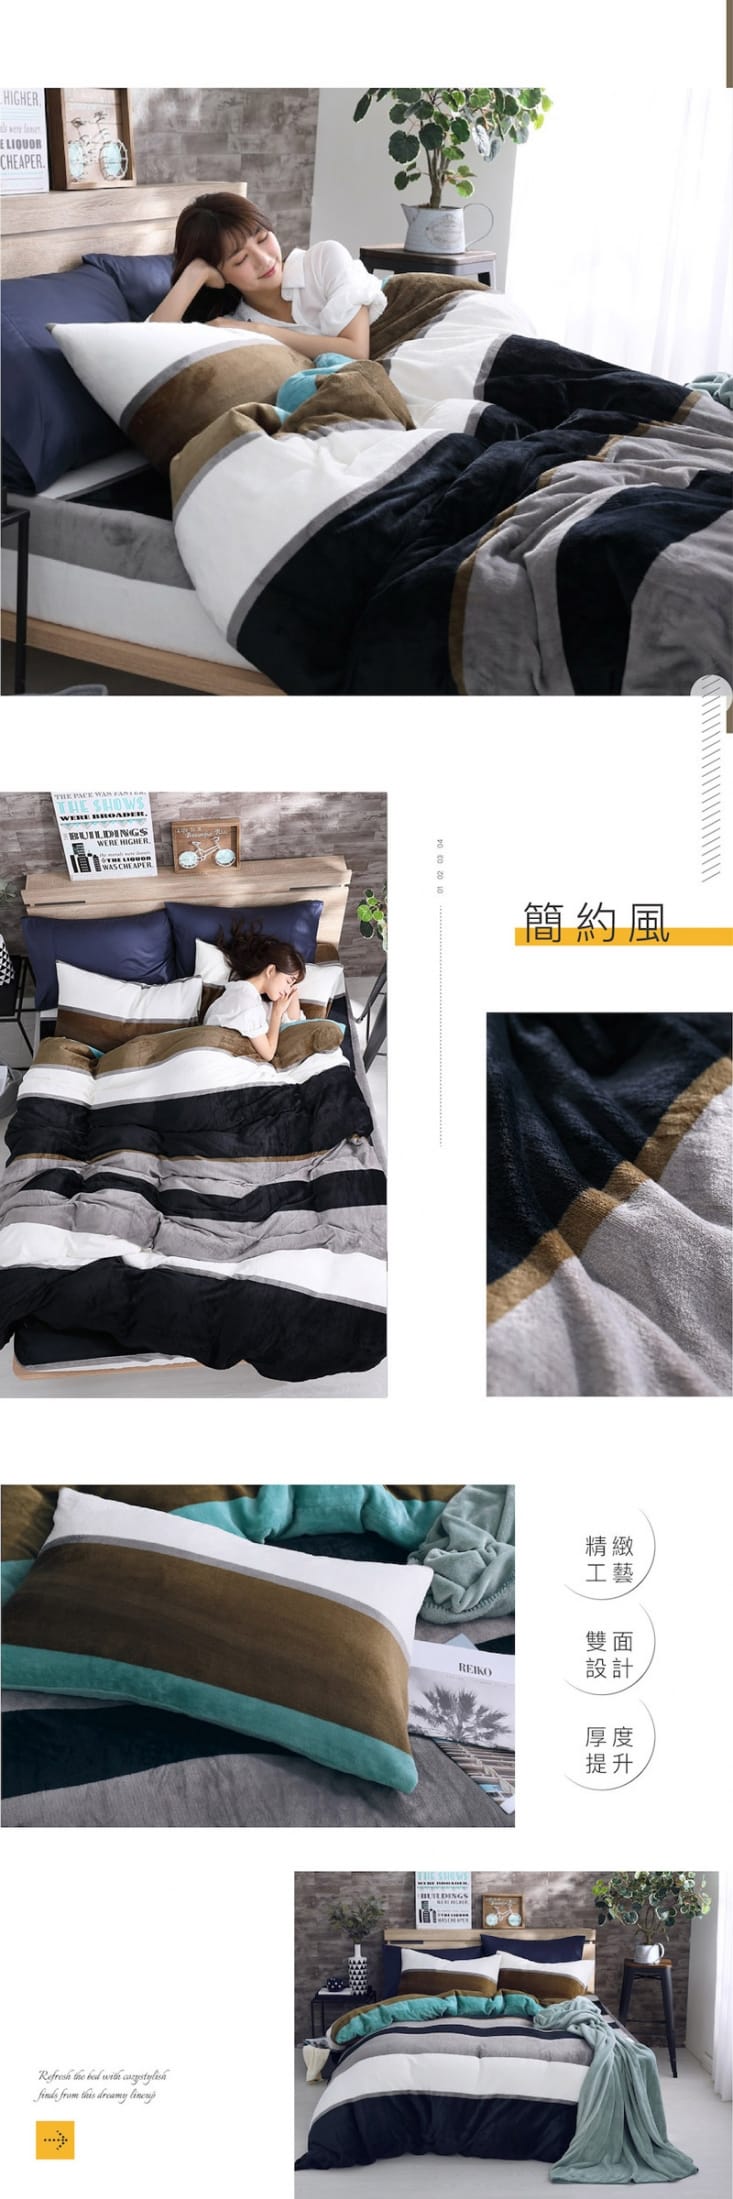 【BEST】法蘭絨床包枕套組or兩用毯被套 單人/雙人/加大